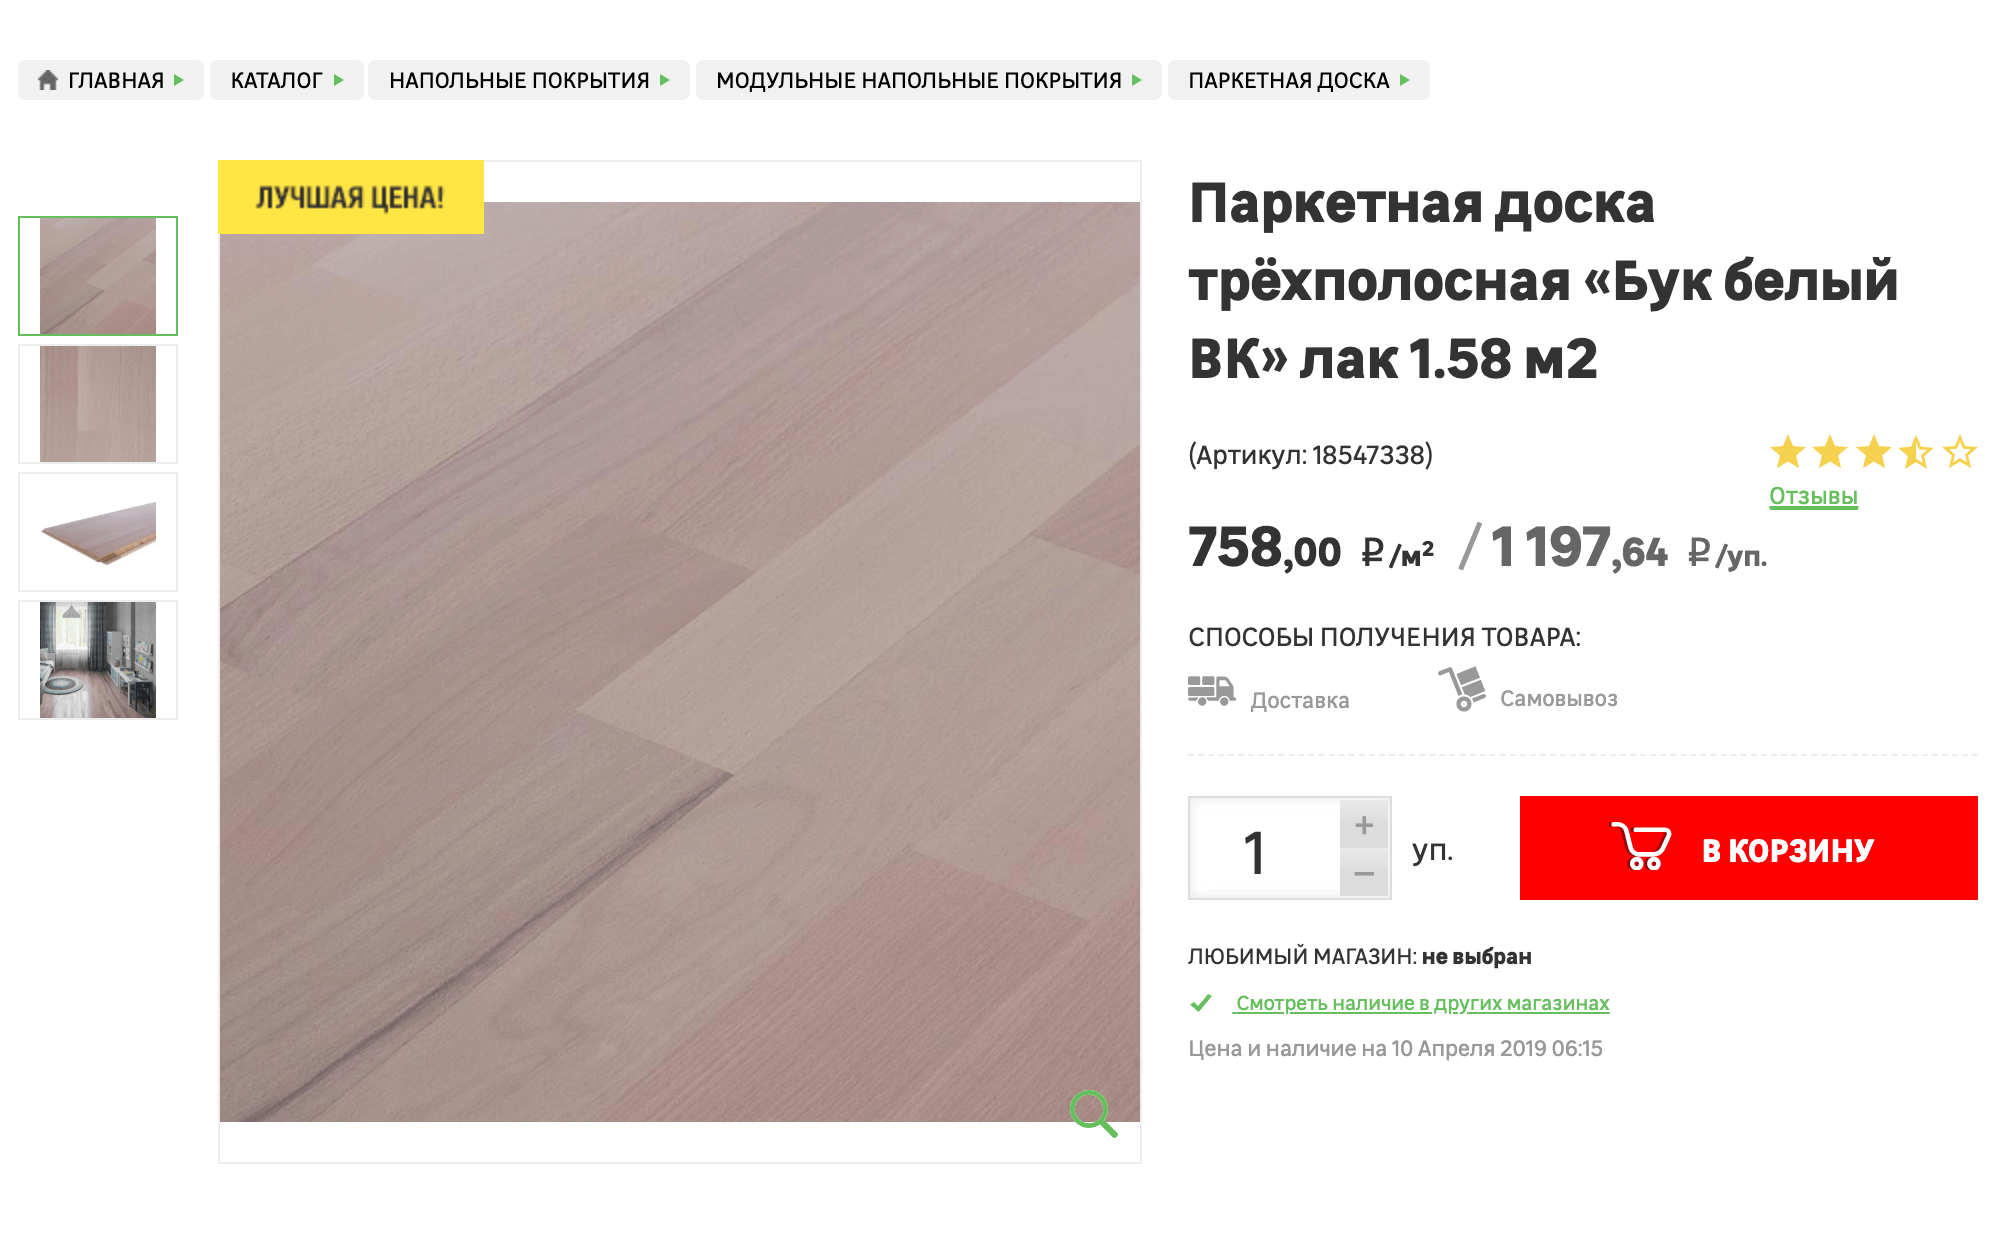 Цена за 1 м² паркетной доски начинается от 758 <span class=ruble>Р</span>